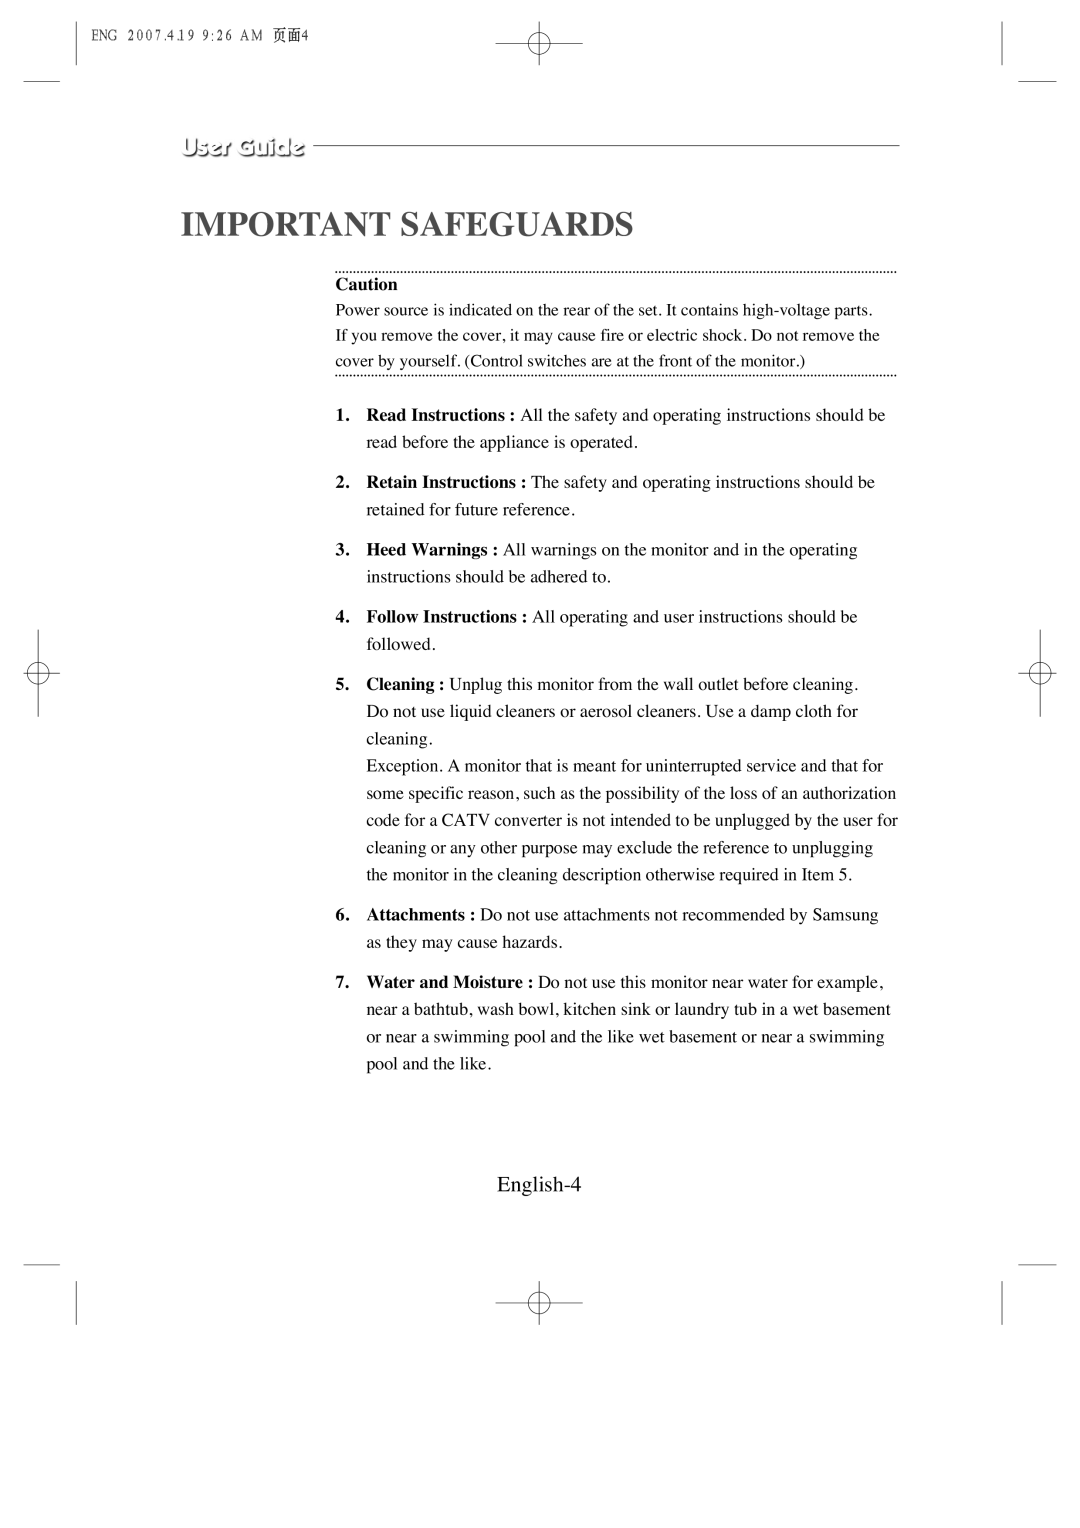 Samsung SMC-213, SMC-214 U manual Important Safeguards, English-4 